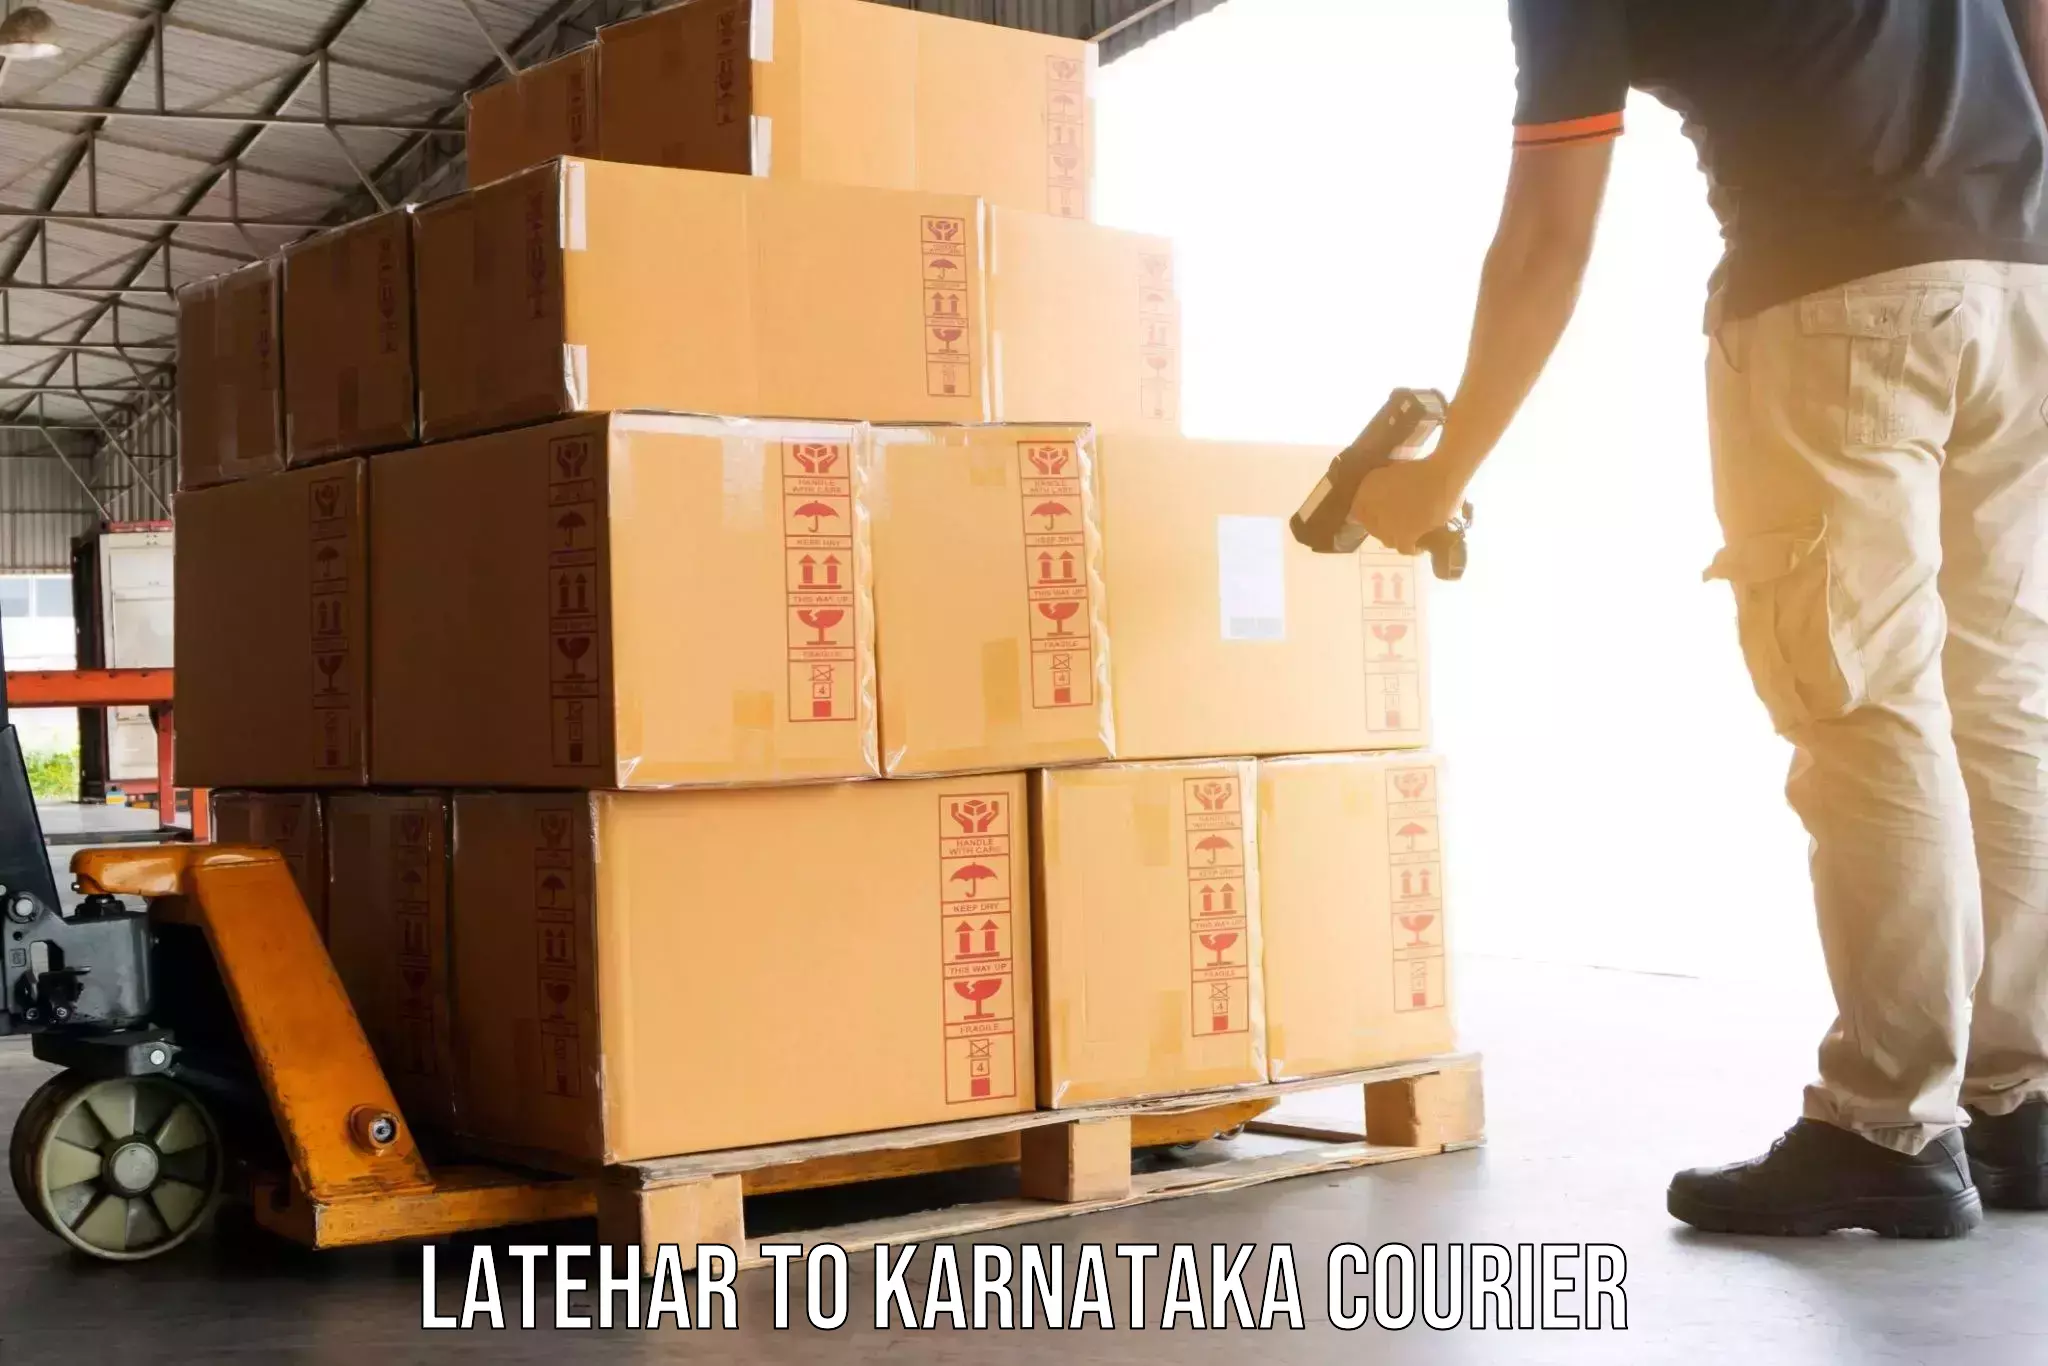 Moving and packing experts Latehar to Karnataka